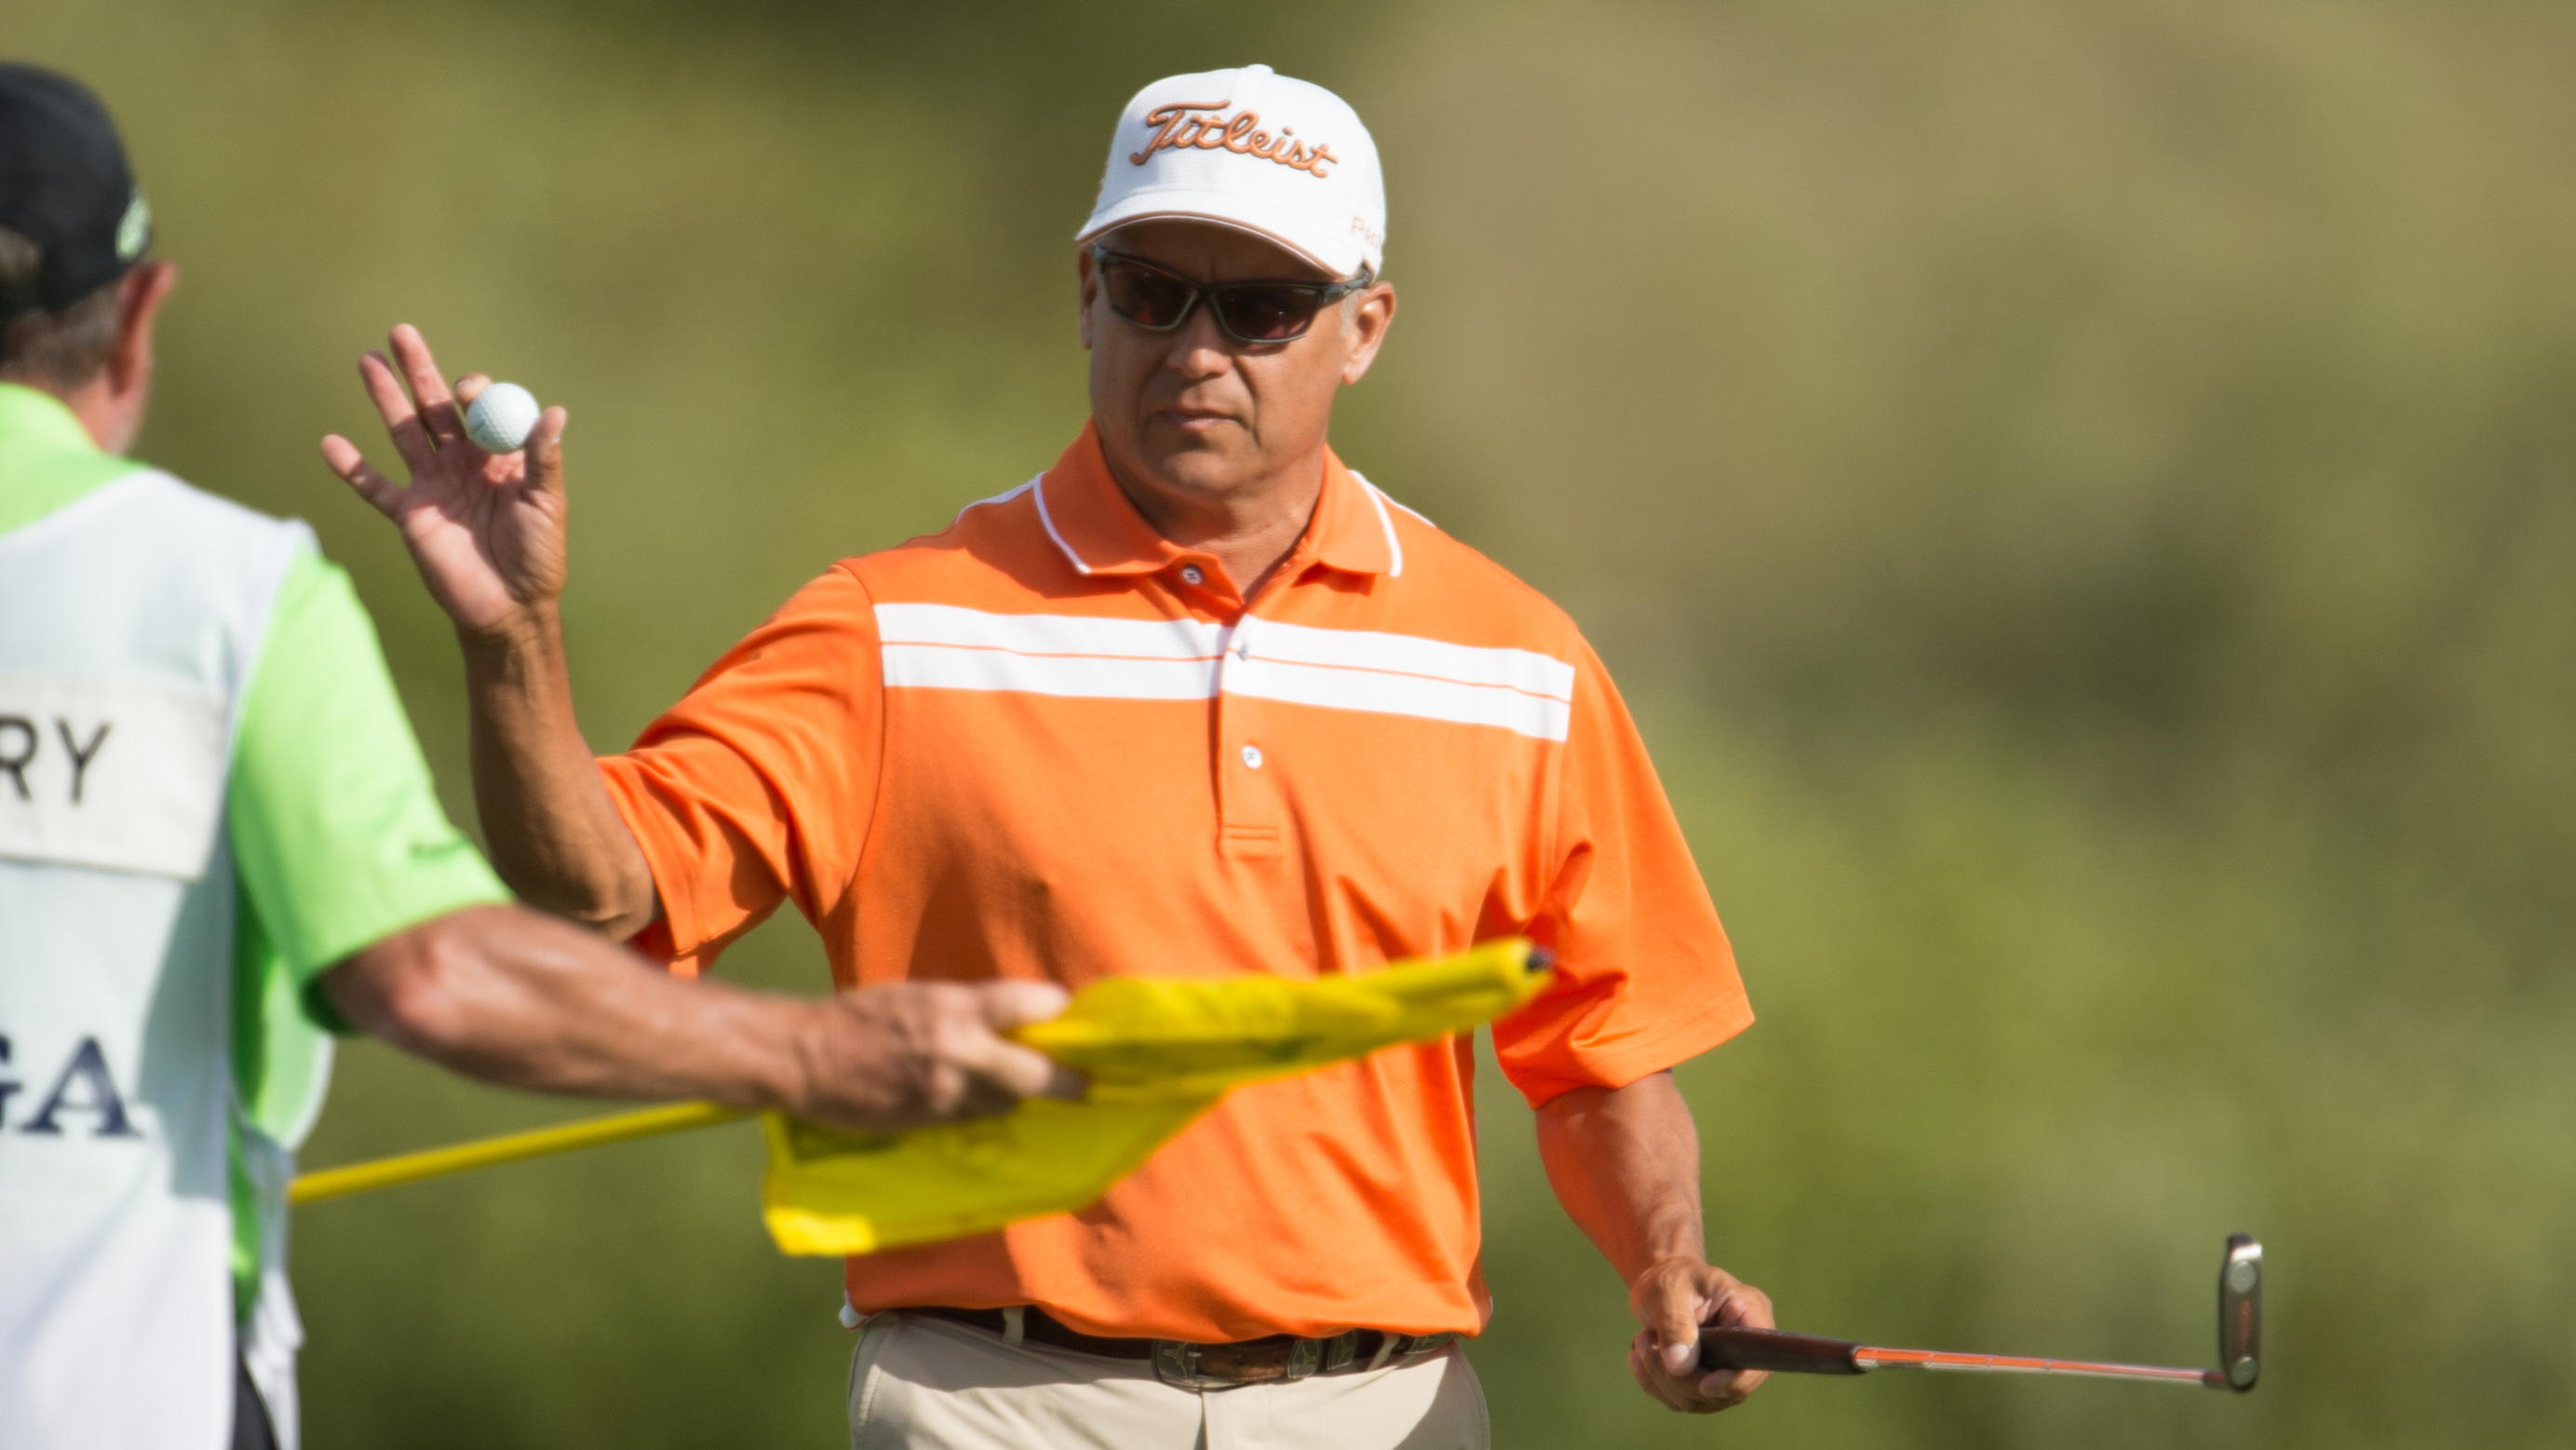 2017 PGA Proffesional Champion Omar Uresti found redemption through reflection